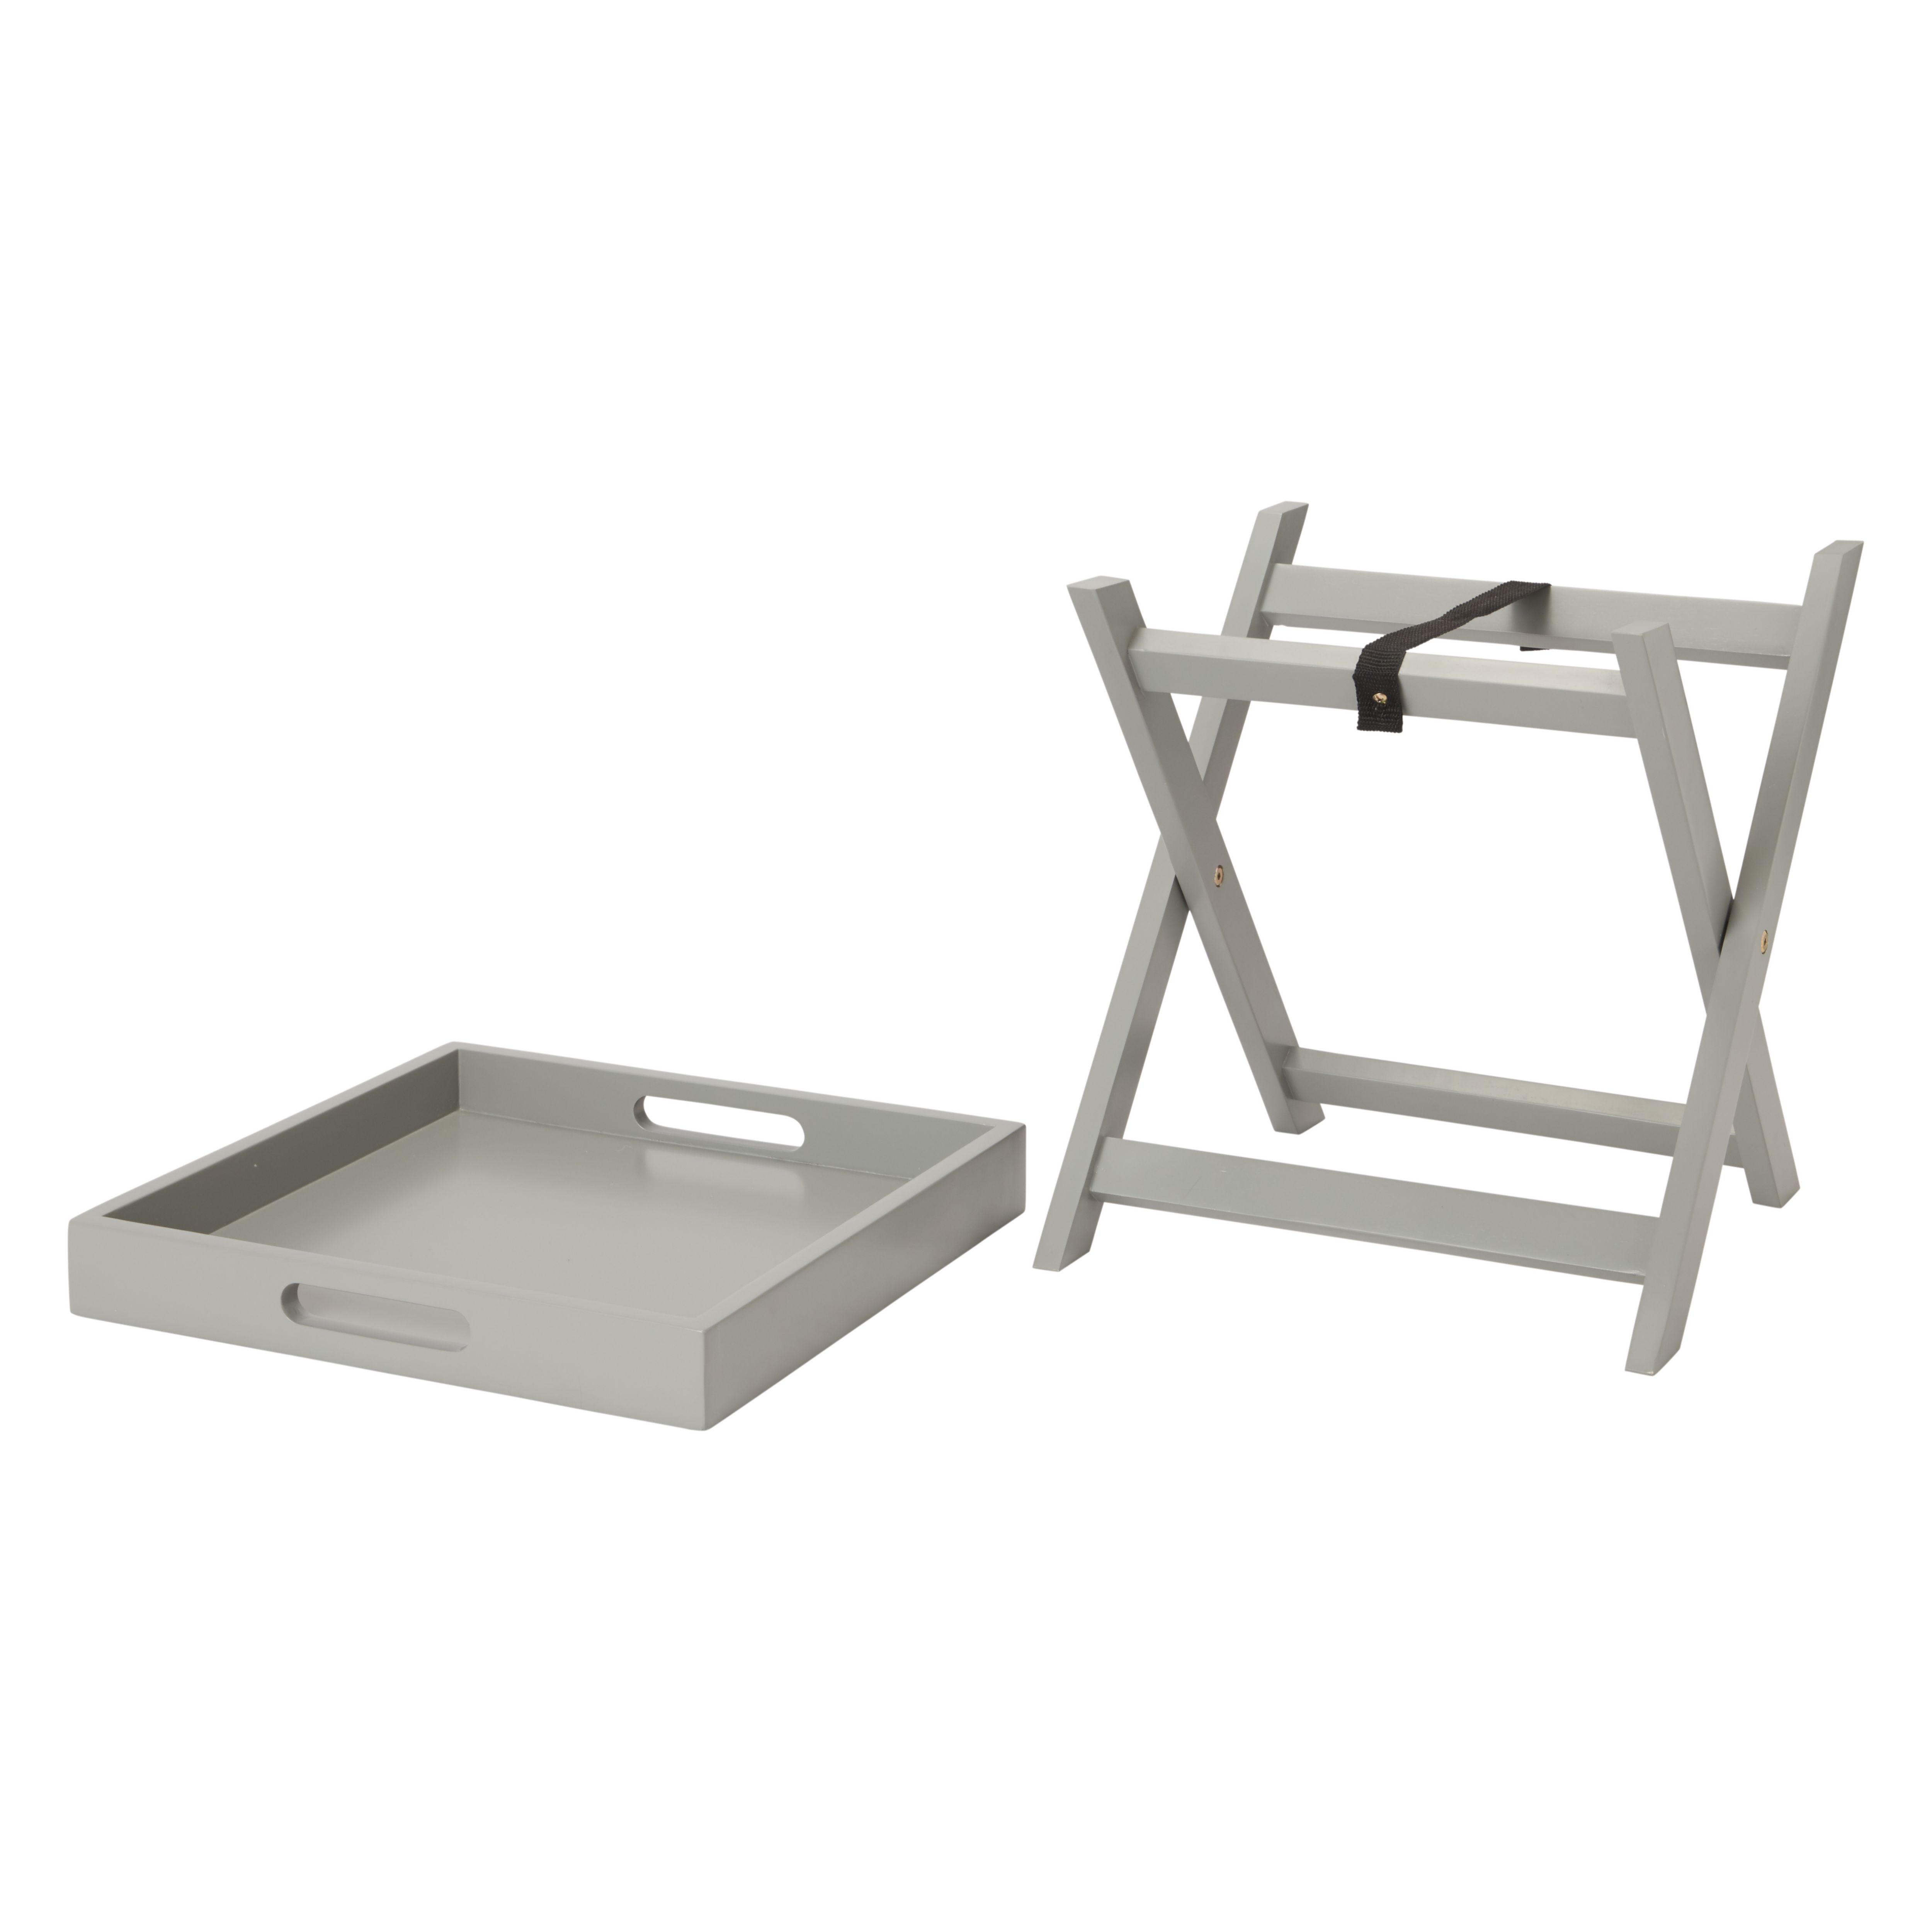 Matt grey Tray table (H)44cm (W)40cm (D)40cm